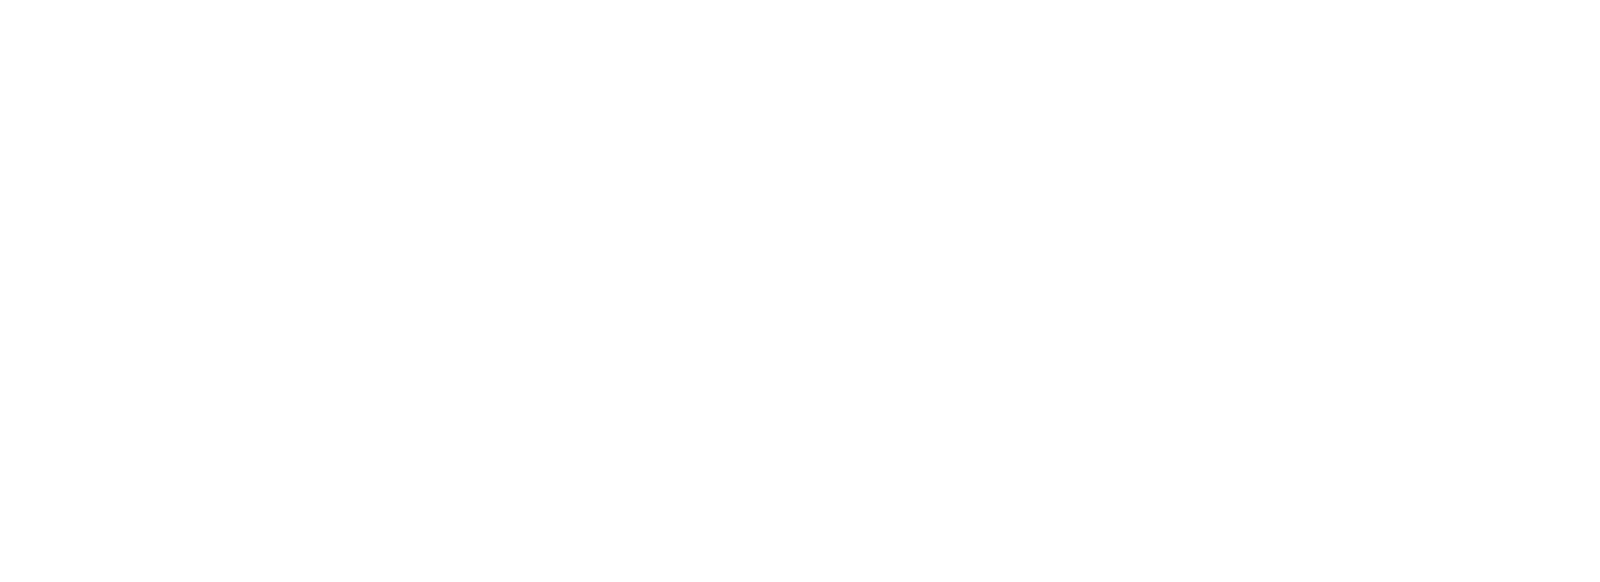 WOMCADOLE、新曲『ヒカリナキセカイ』ミュージックビデオを公開サムネイル画像!